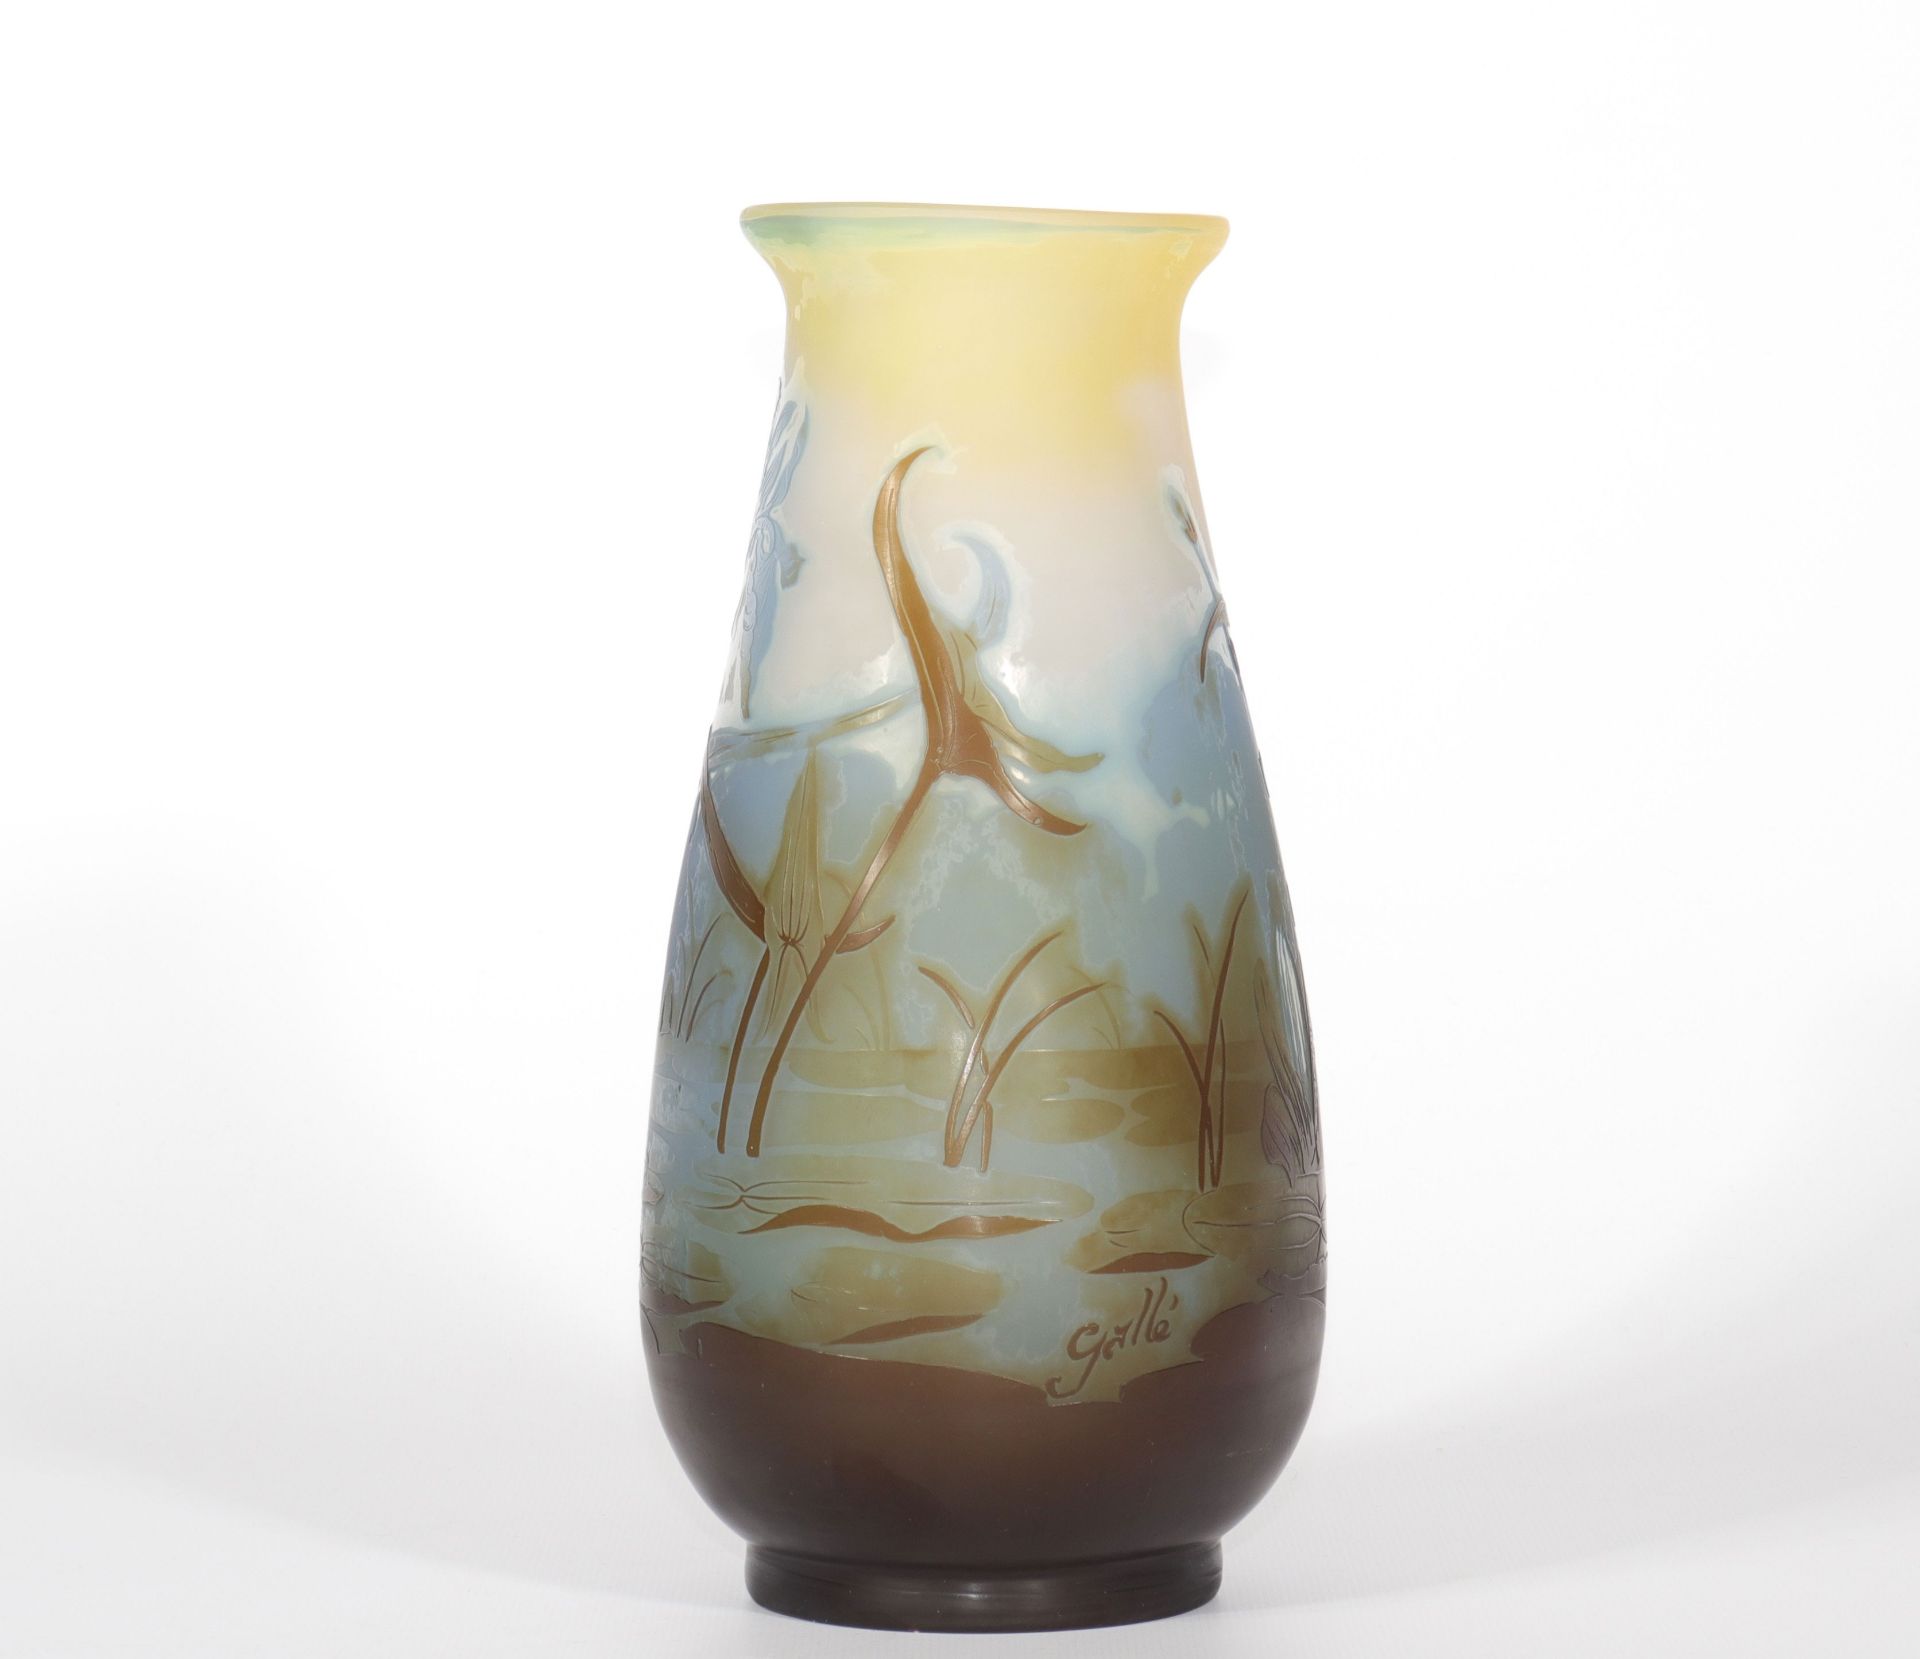 Emile Galle vase with aquatic decoration - Image 5 of 5